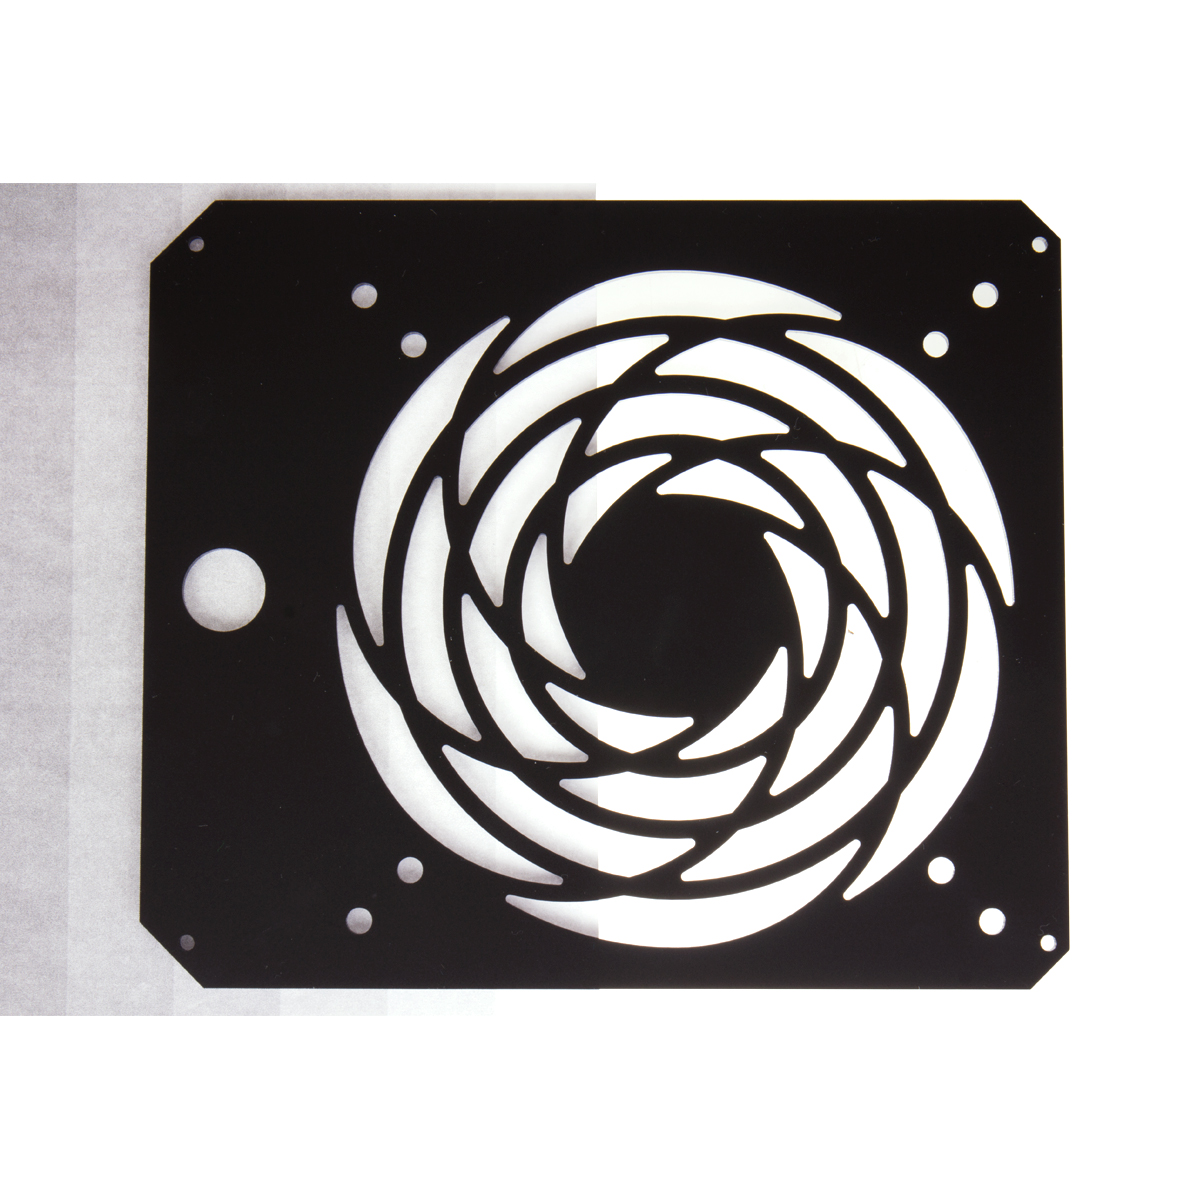 Lazer3D - Lazer3D LZ7 Right Panel (16mm Vandal) - Midnight Black Cyclone